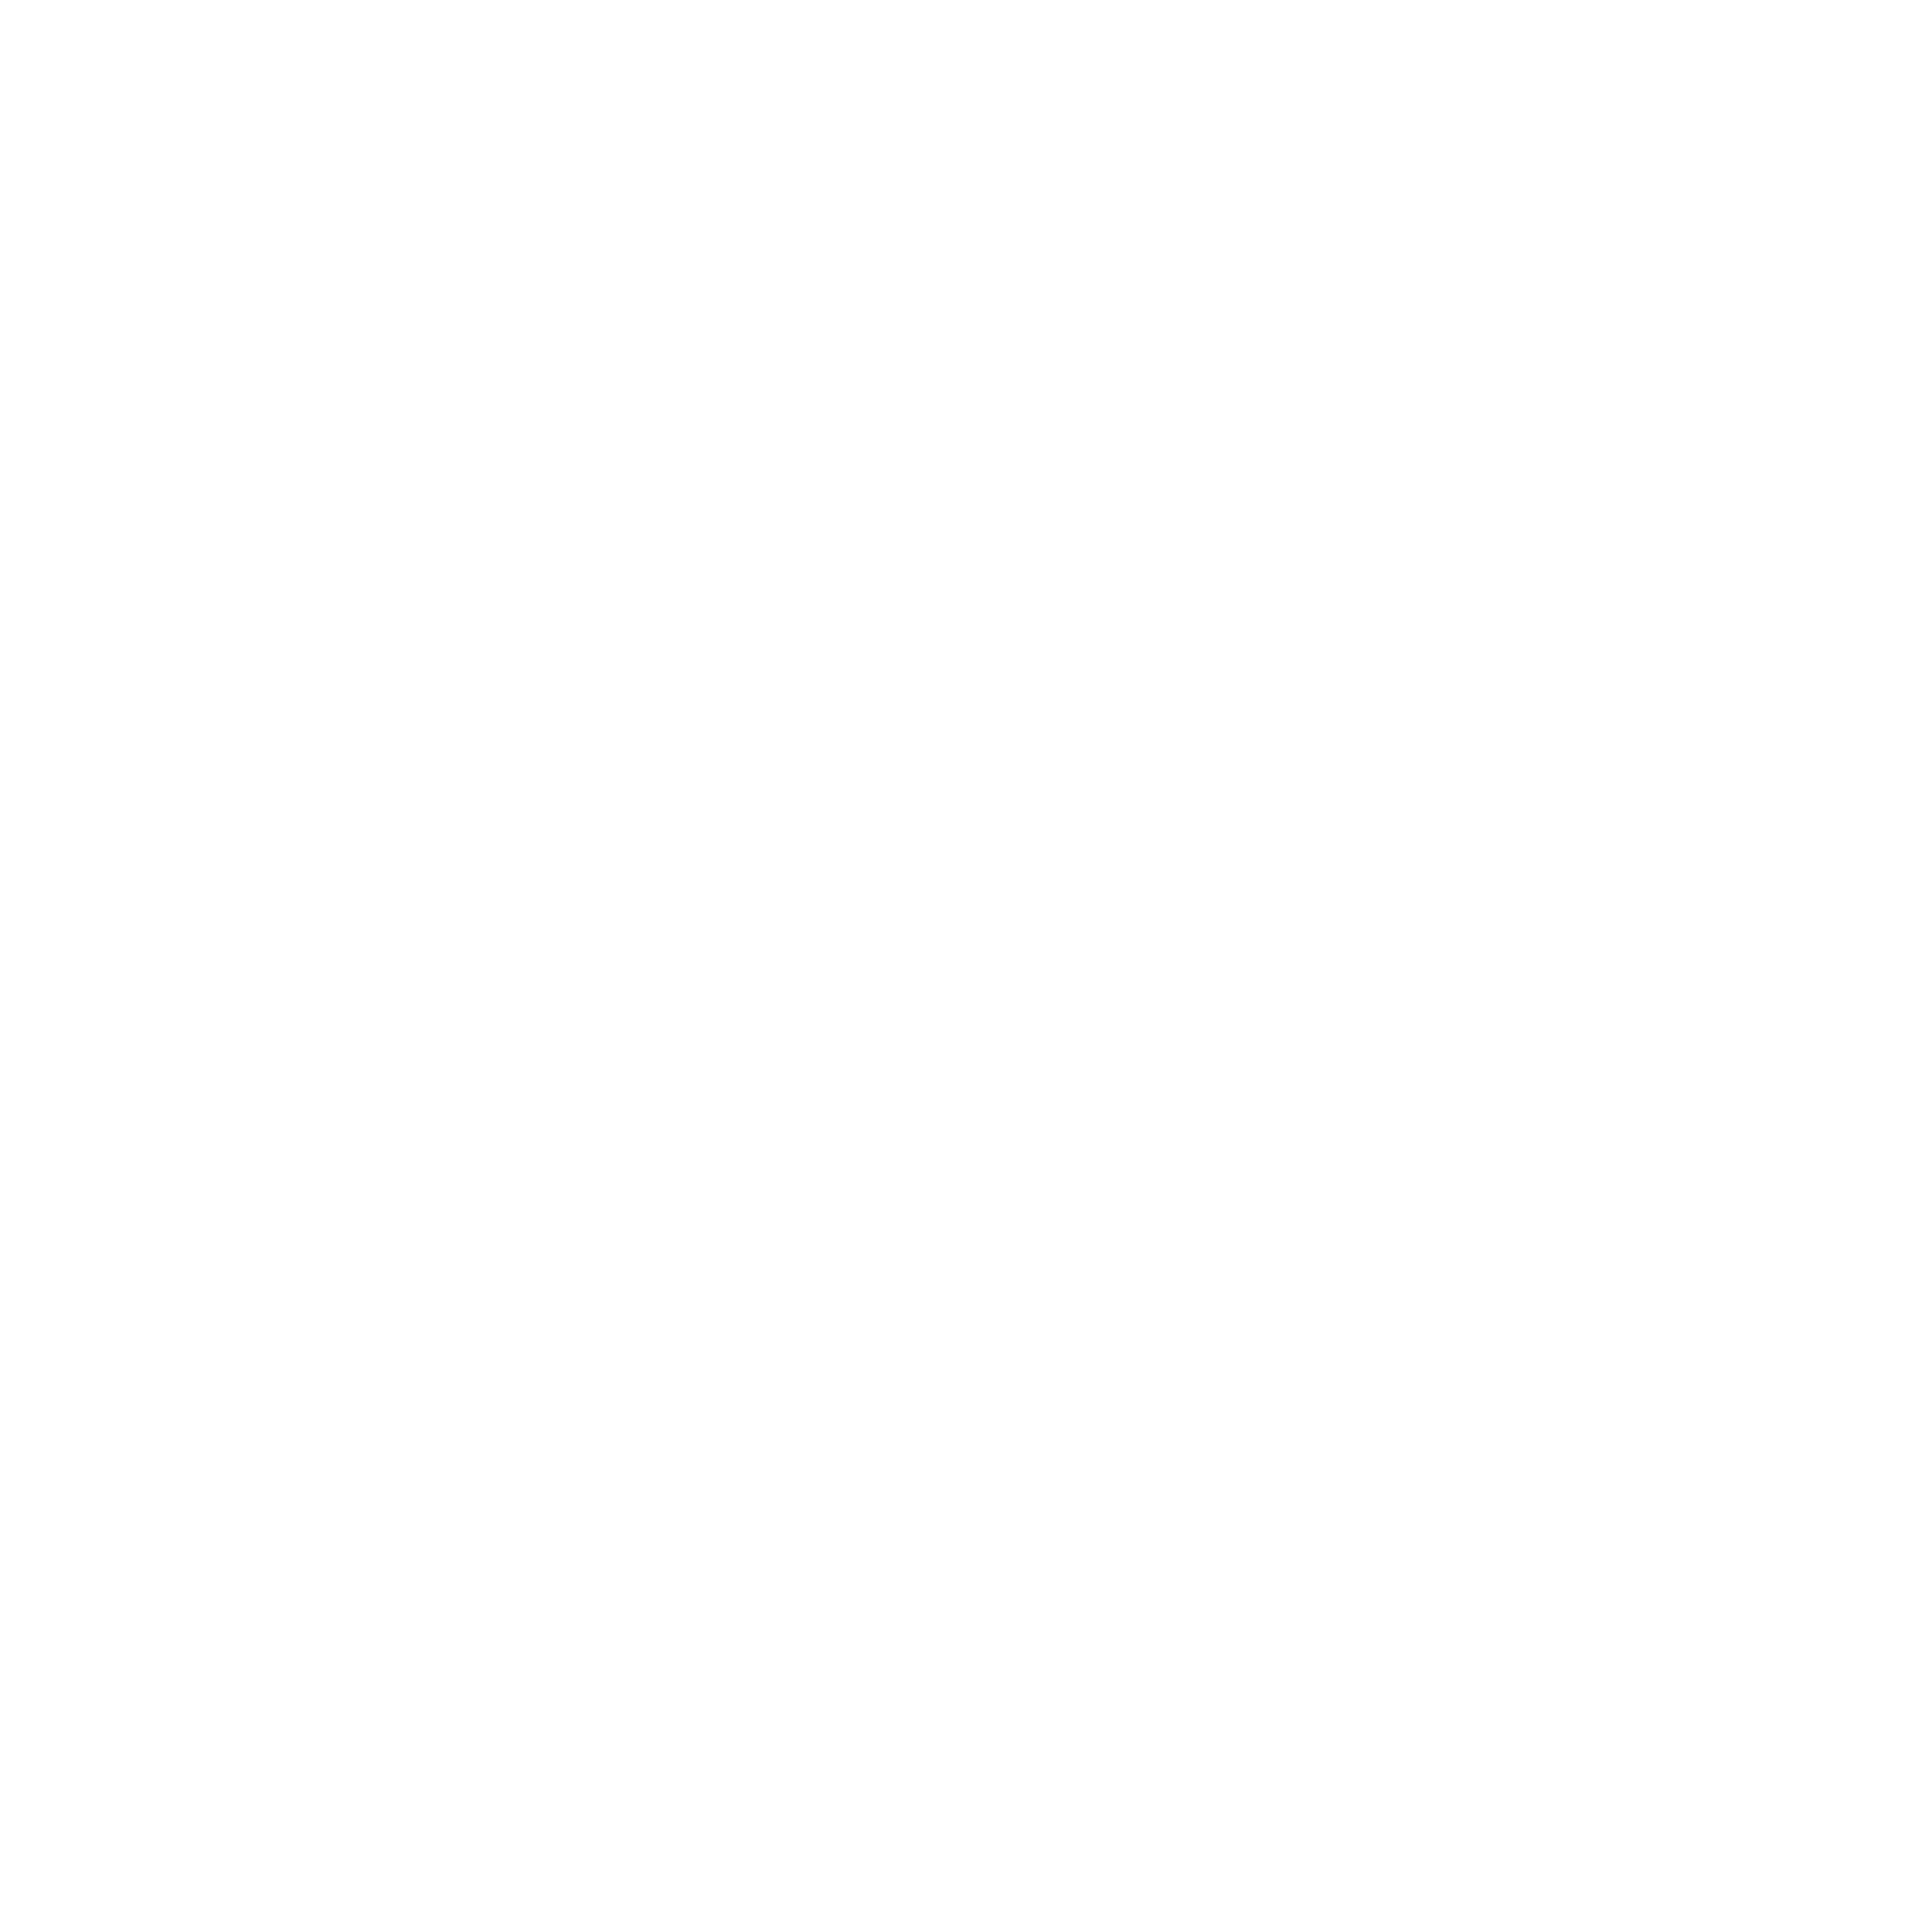 Antonia Dress Calia Collection - The Designer Club